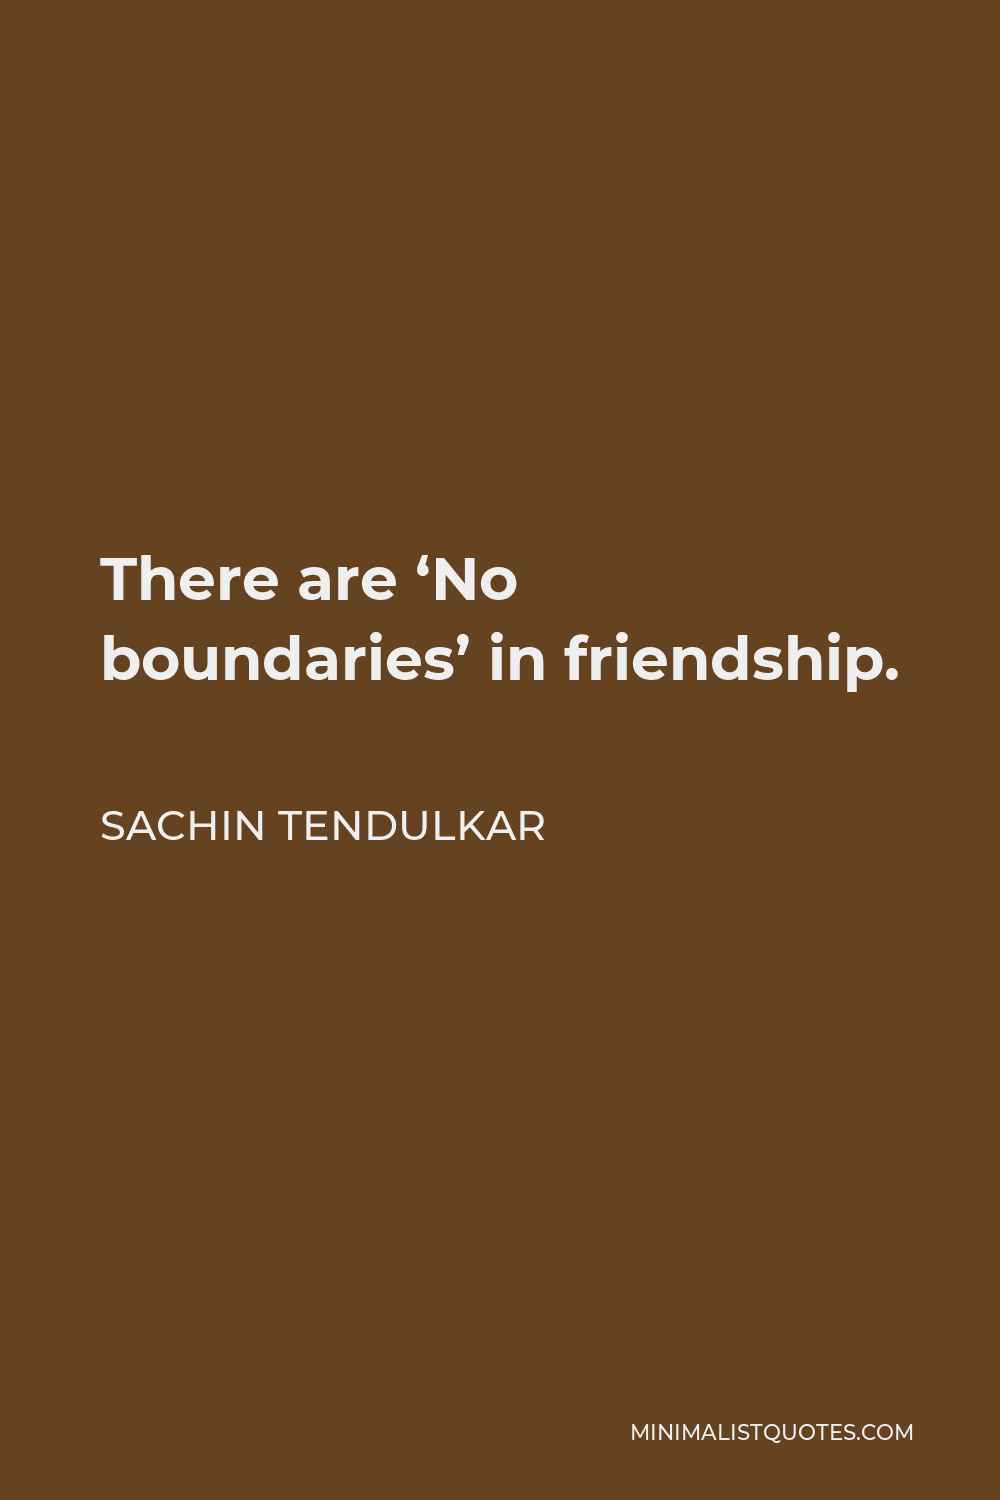 Sachin Tendulkar Quote - There are ‘No boundaries’ in friendship.